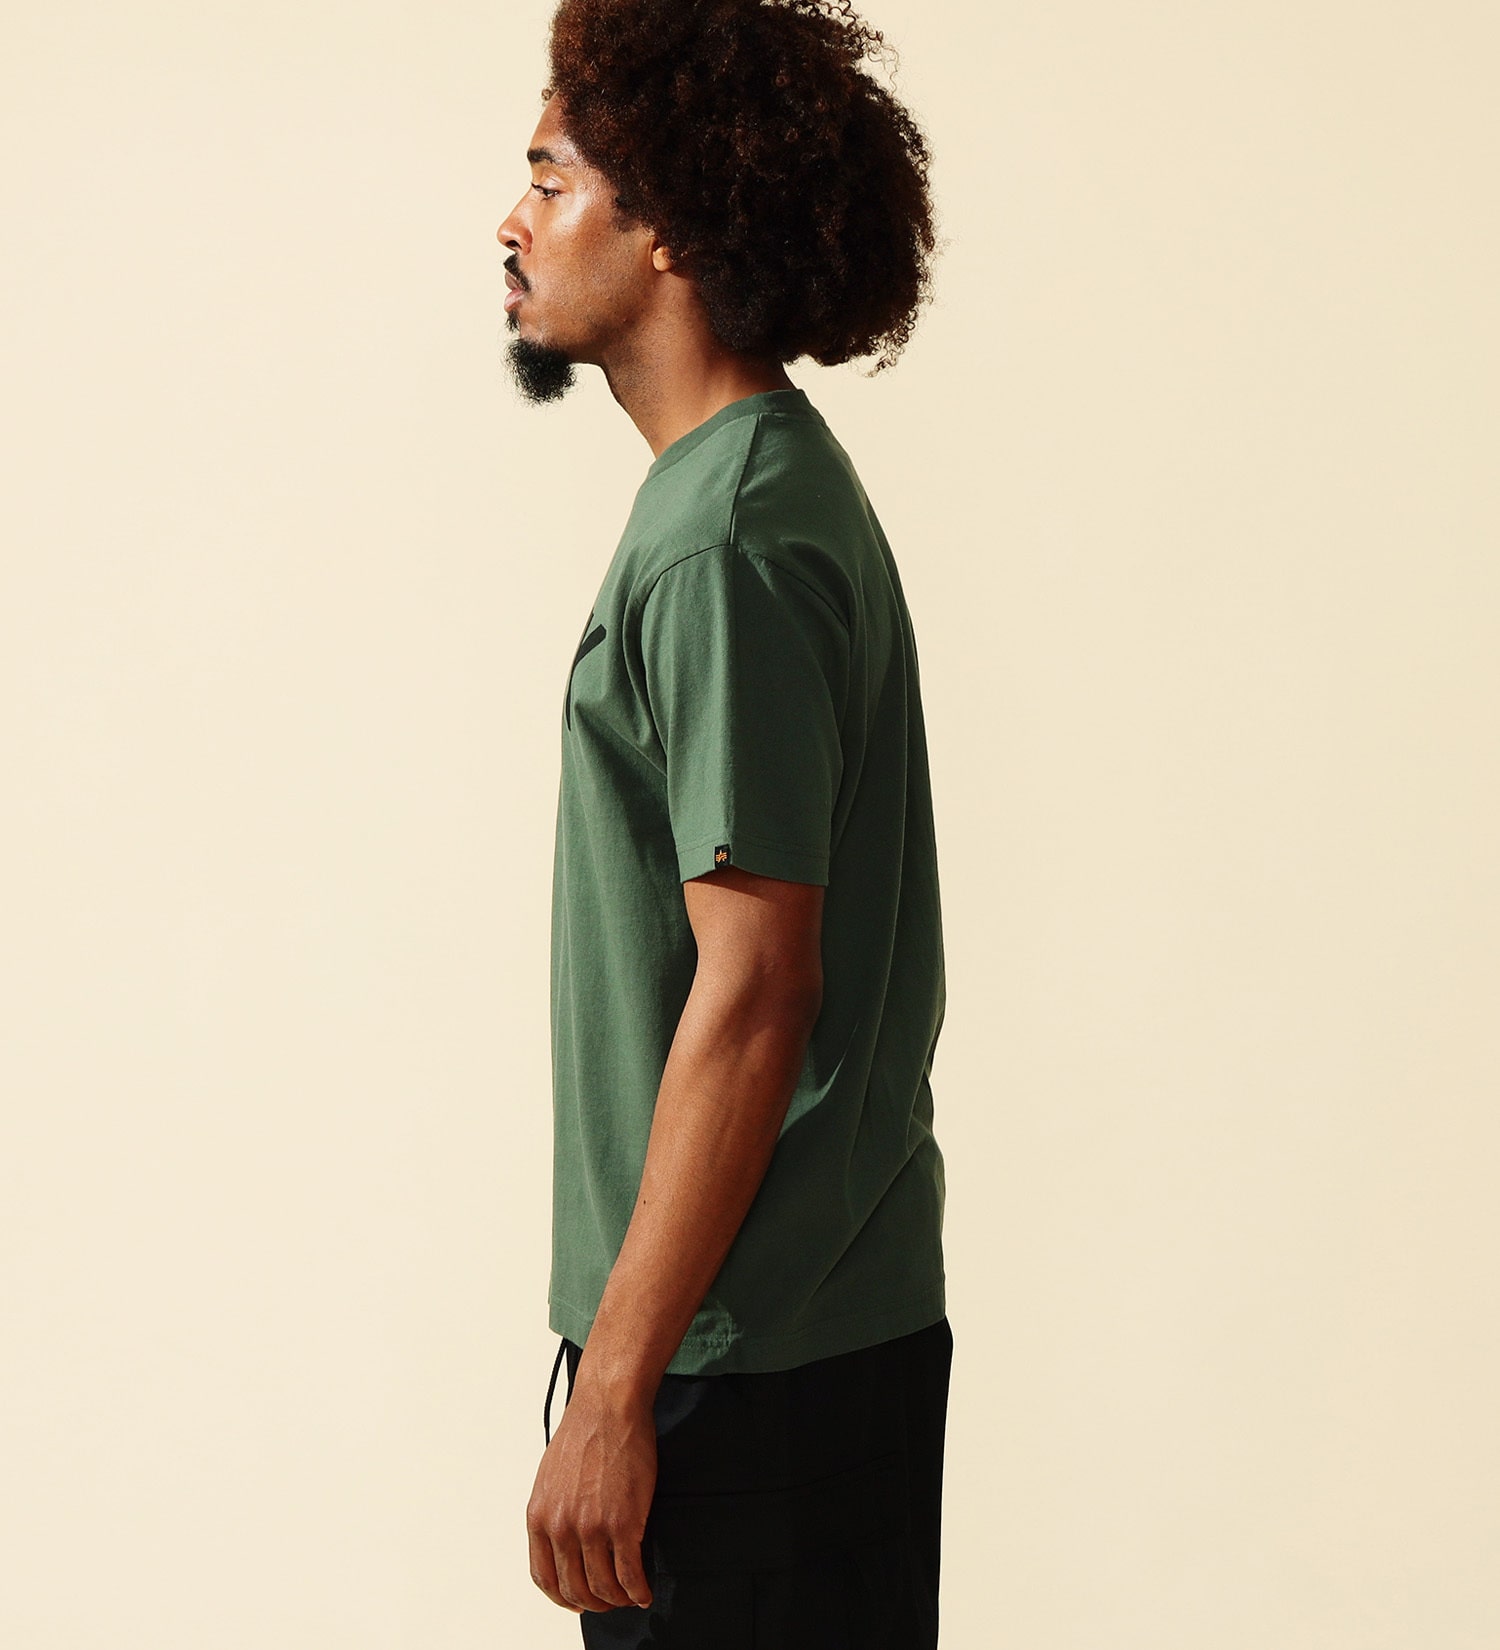 ALPHA(アルファ)のARMYプリントTシャツ 半袖|トップス/Tシャツ/カットソー/メンズ|ダークグリーン